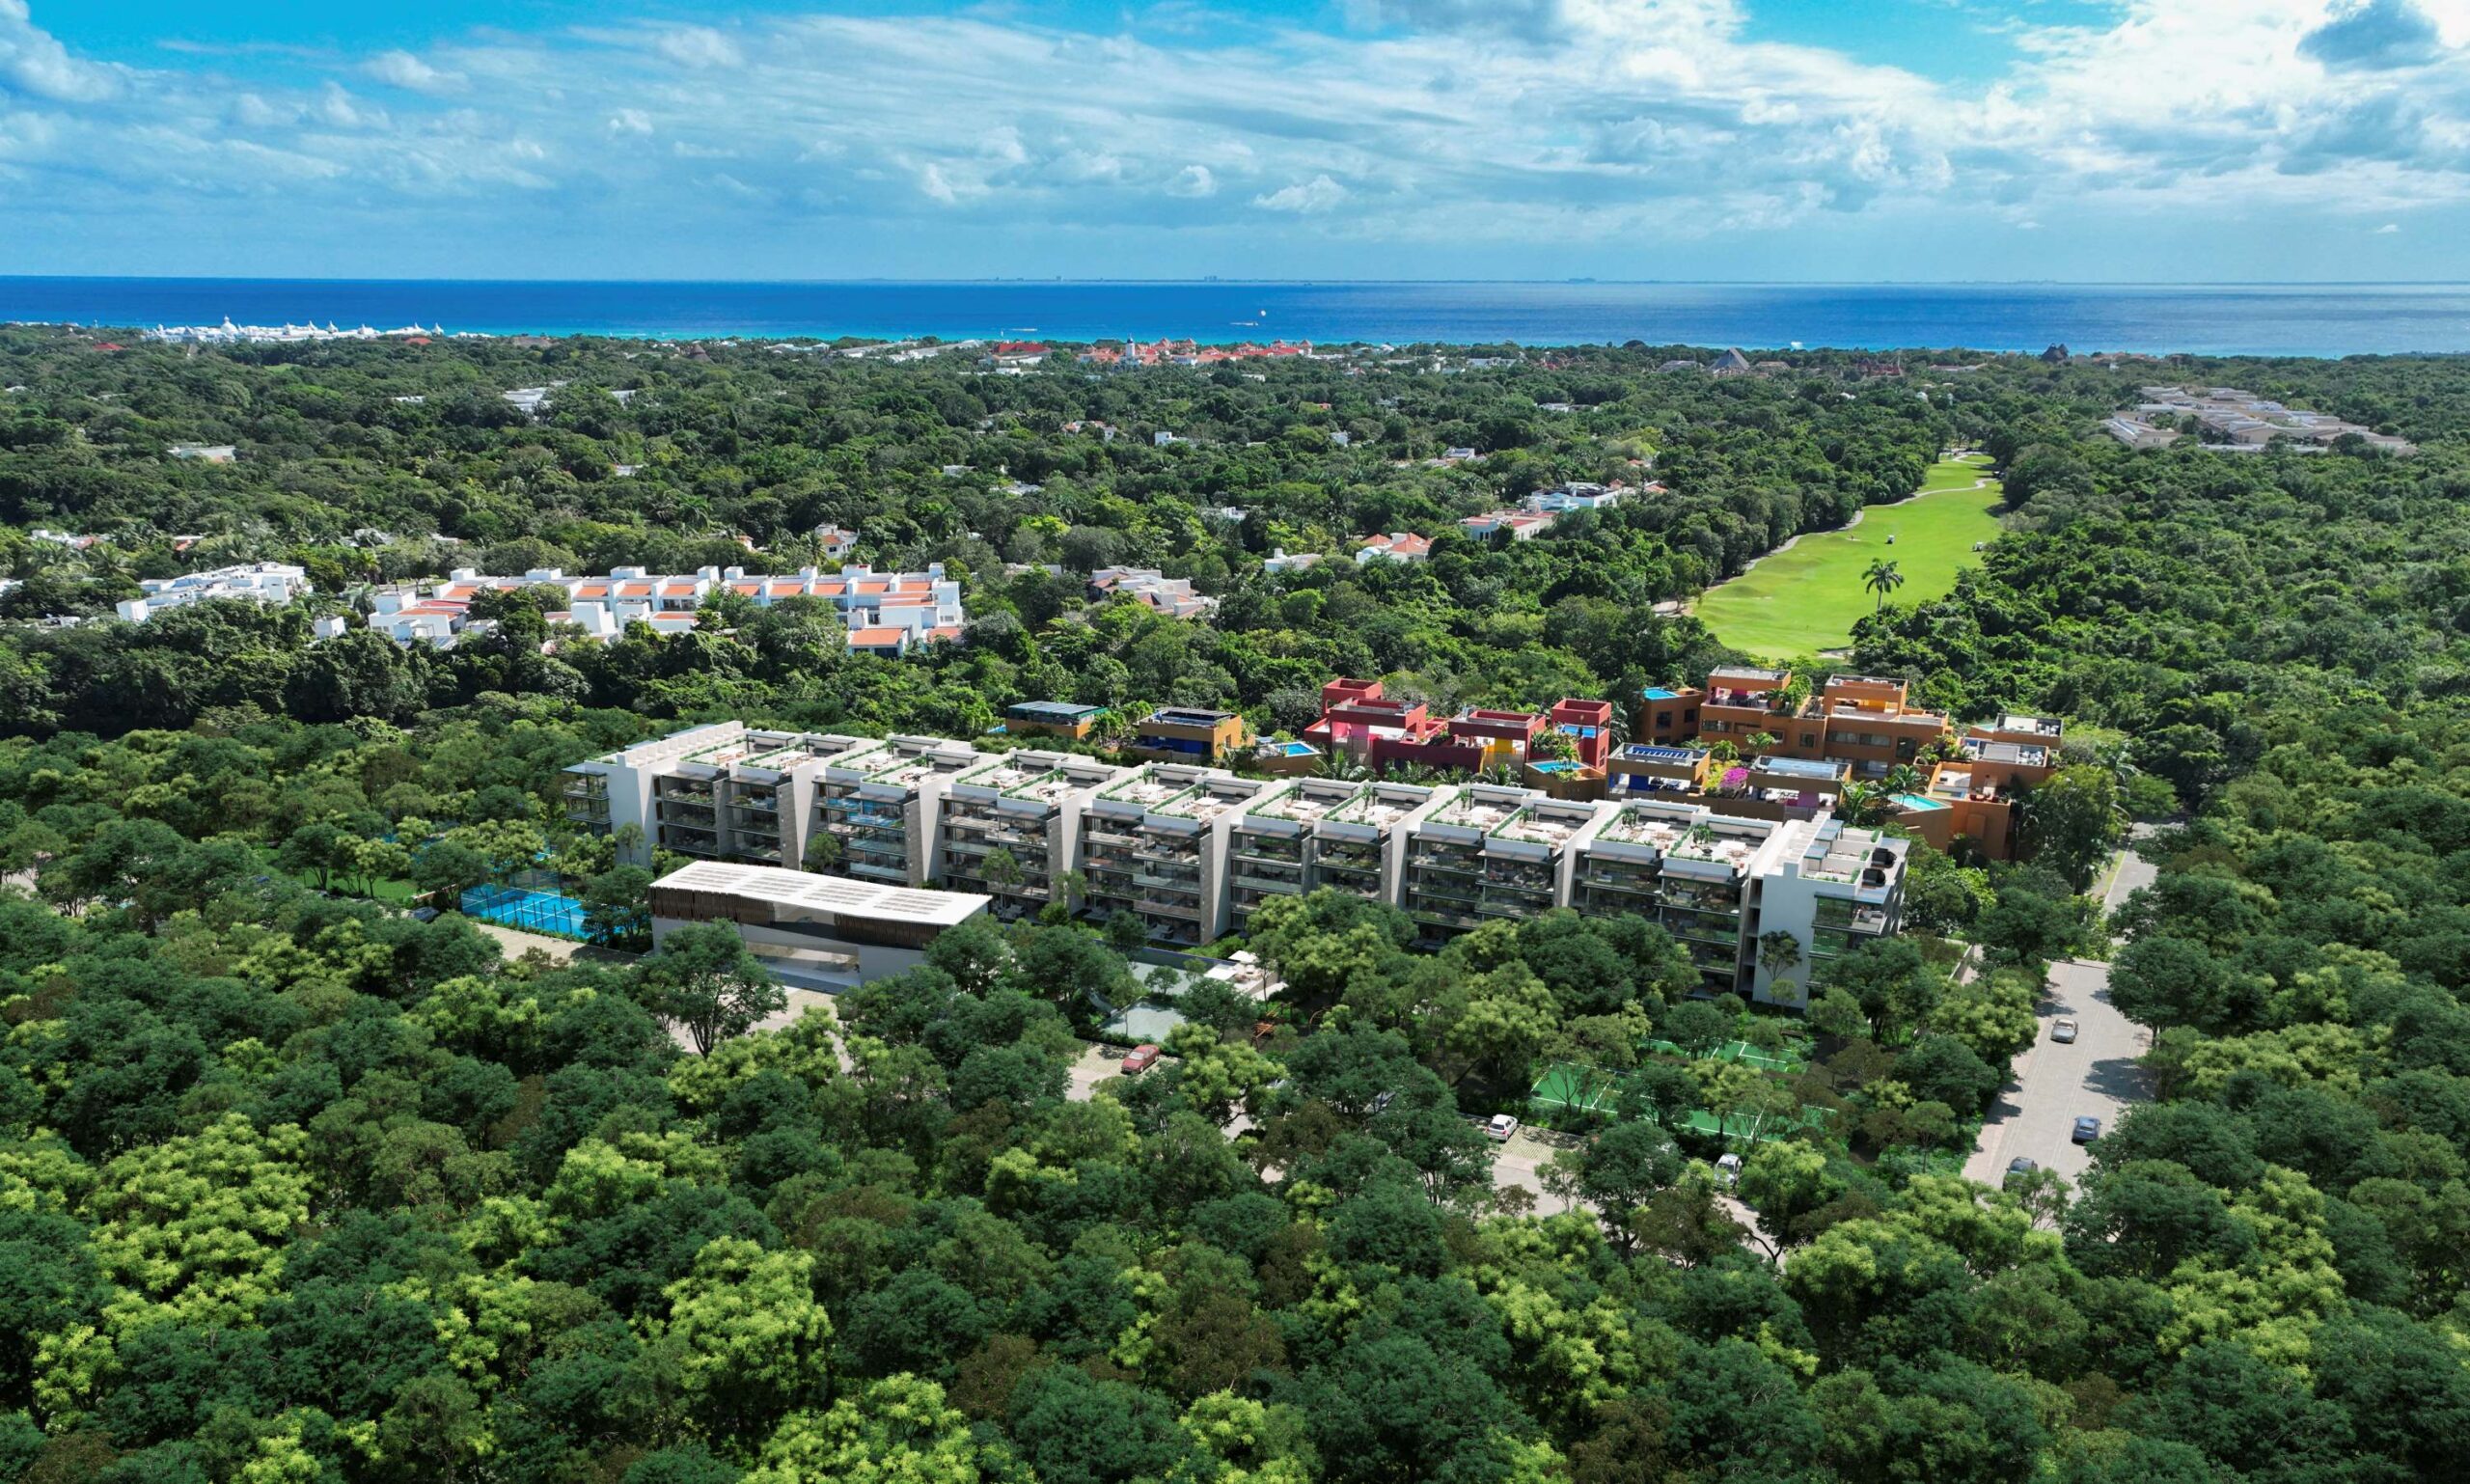 b playacar real estate luxury residences aerial view